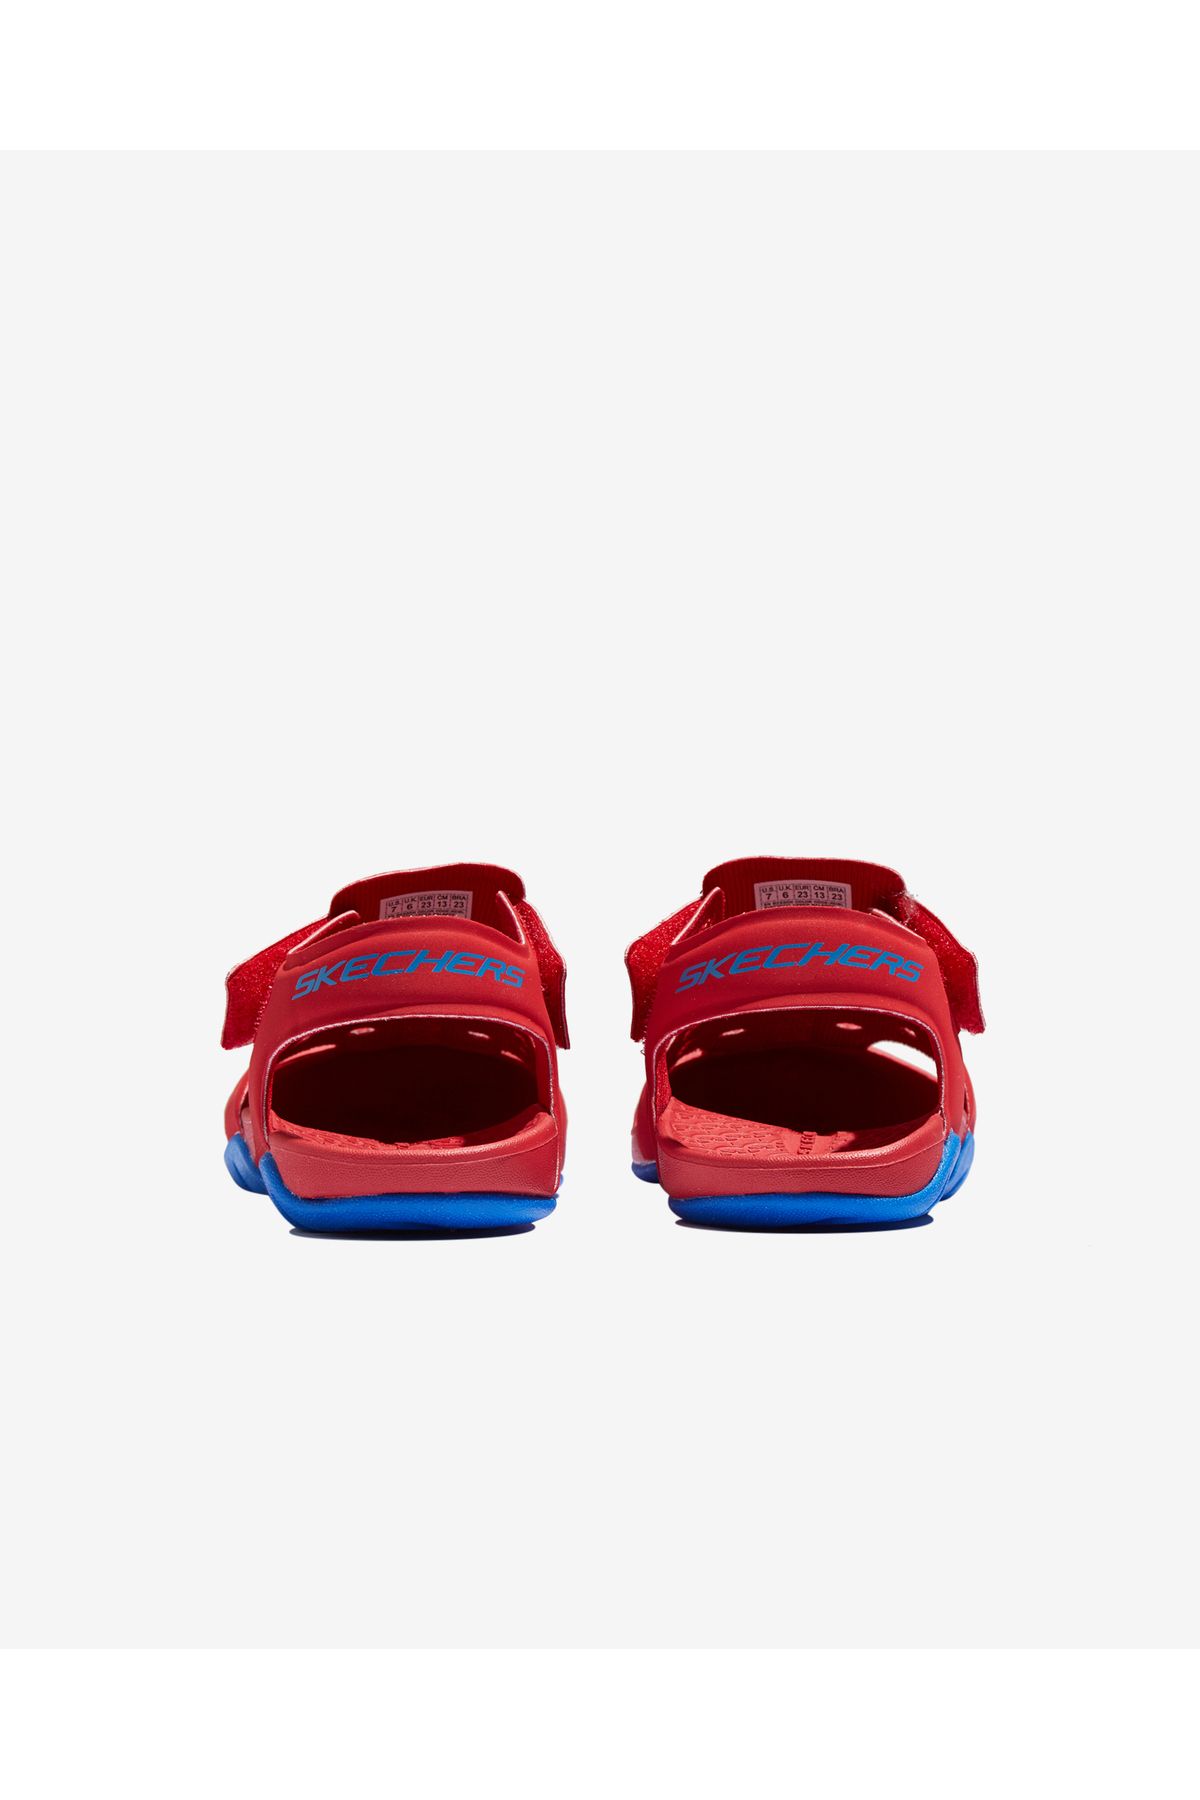 Skechers Side Wave Boy Sandals Red 92330n RDBL